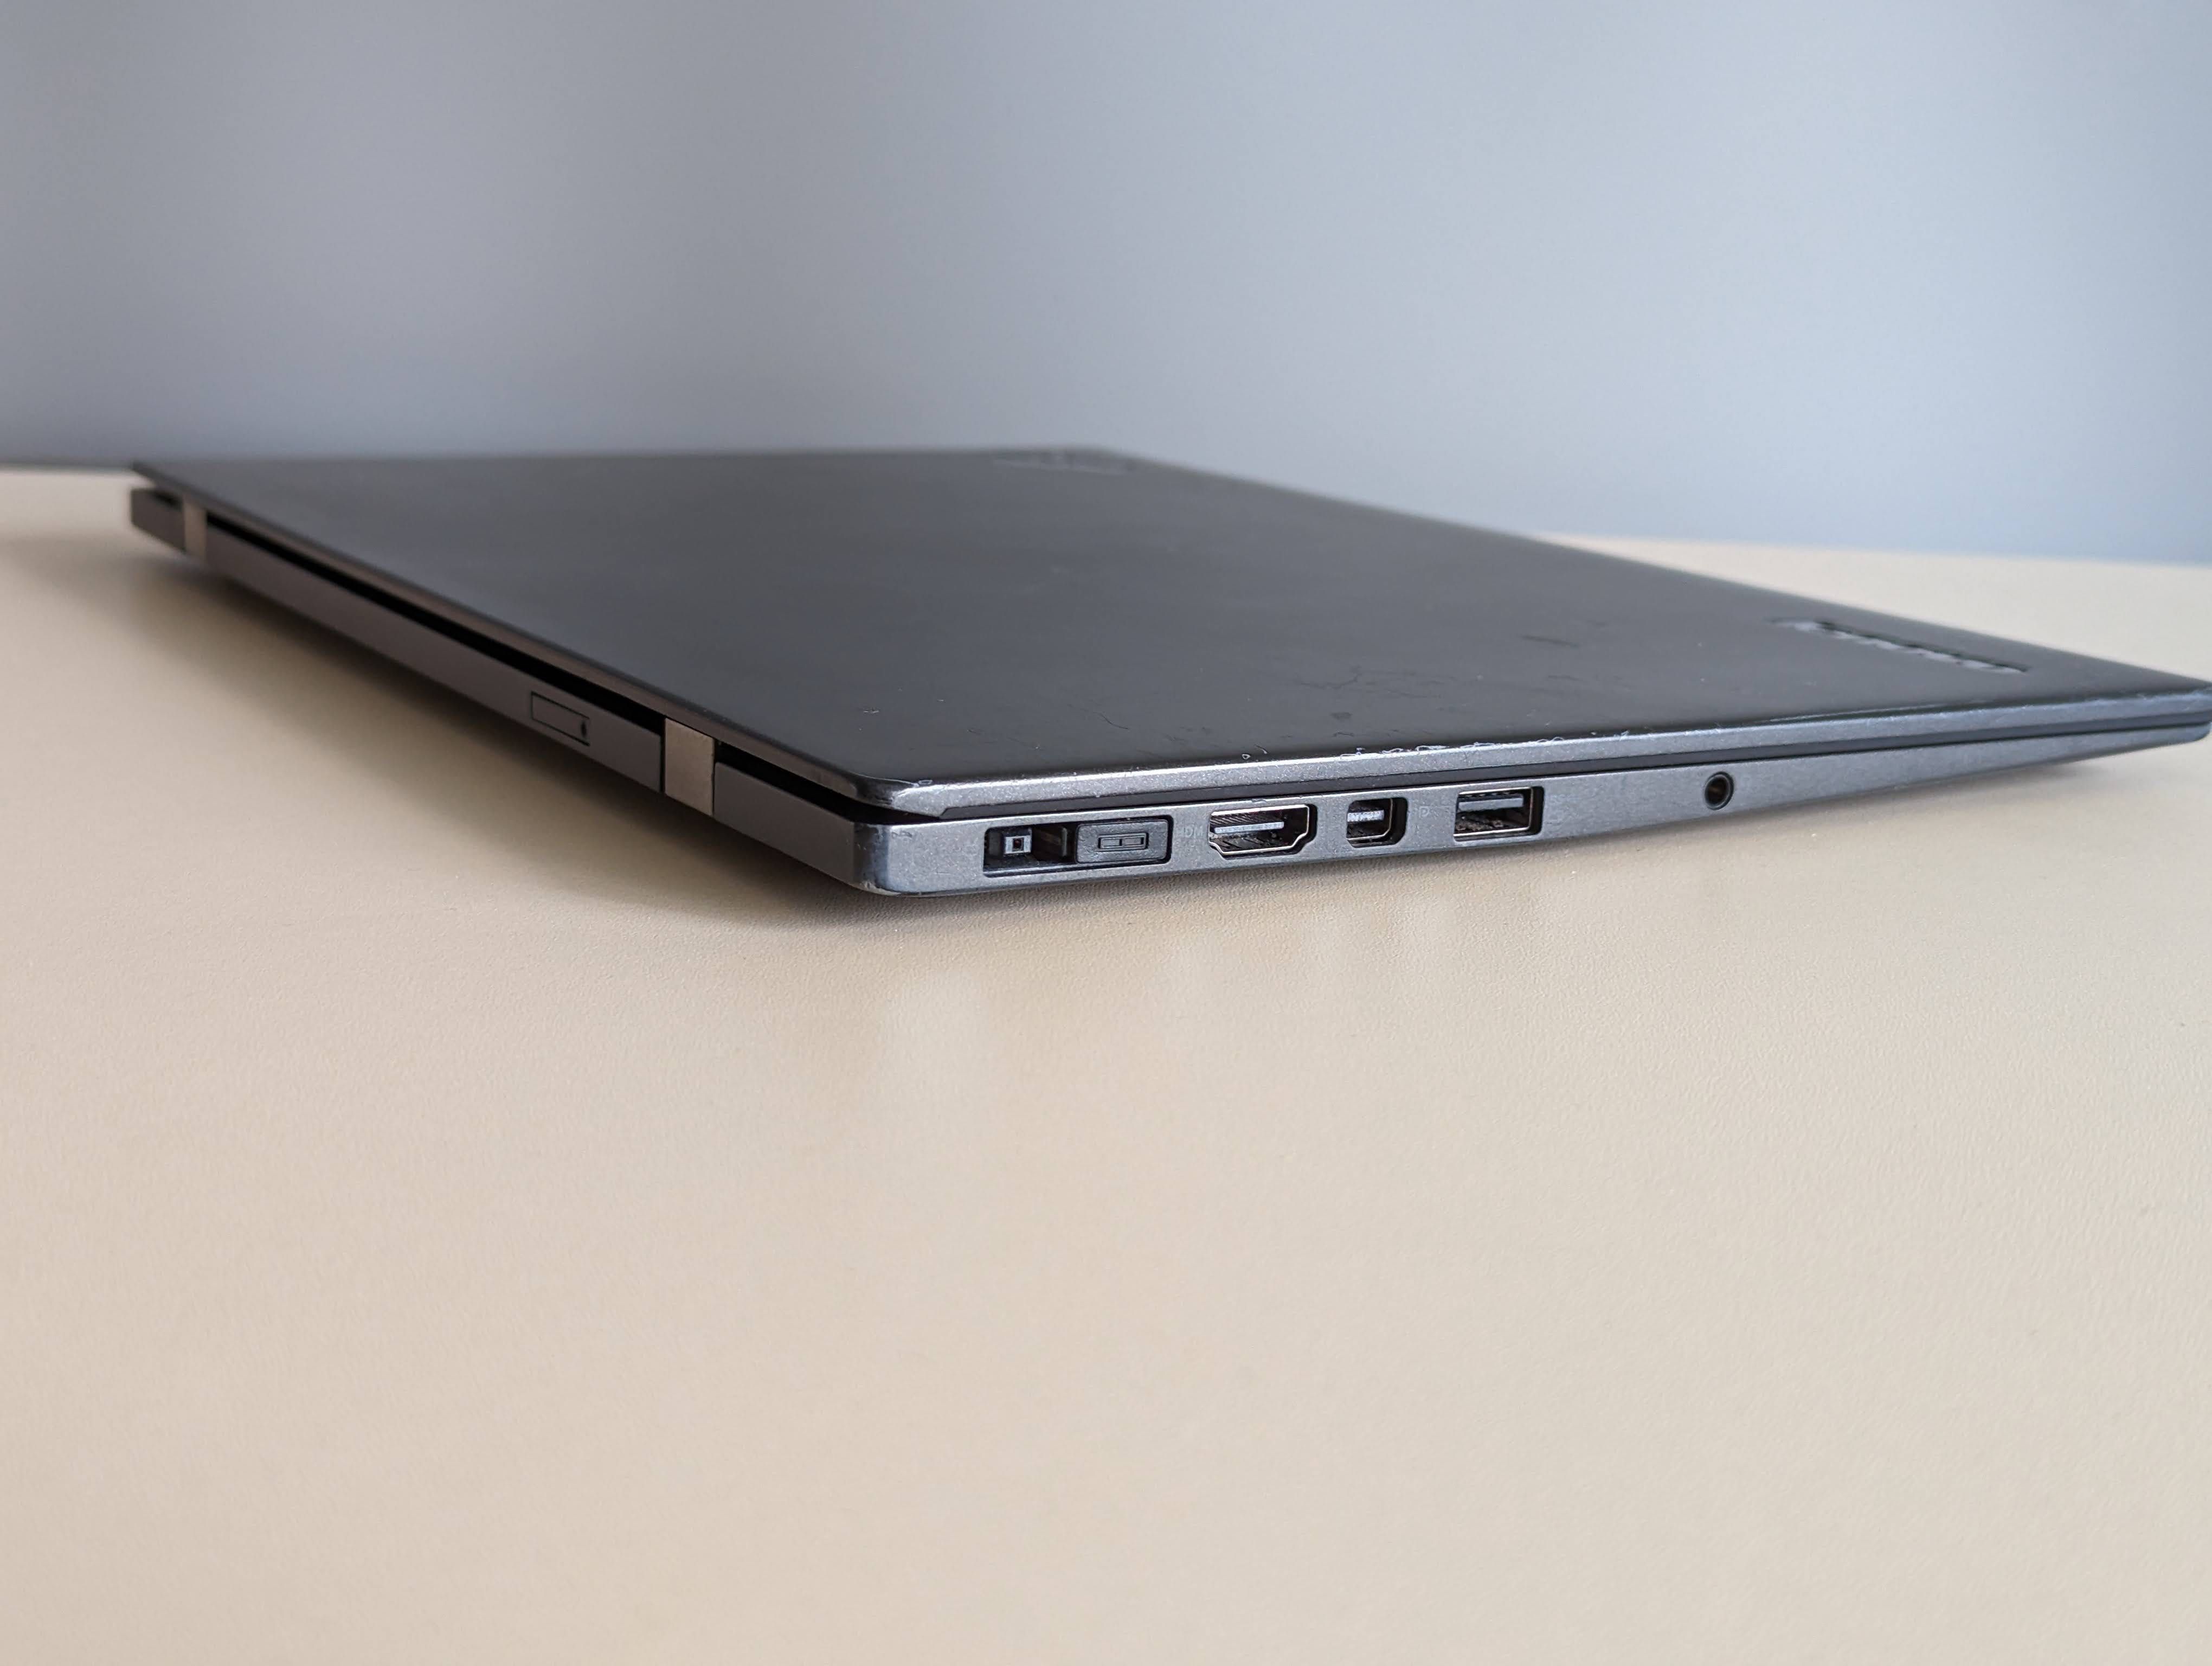 ThinkPad X1 Carbon 2th Gen  i7-4600u, 8GB, під відновлення, деталі